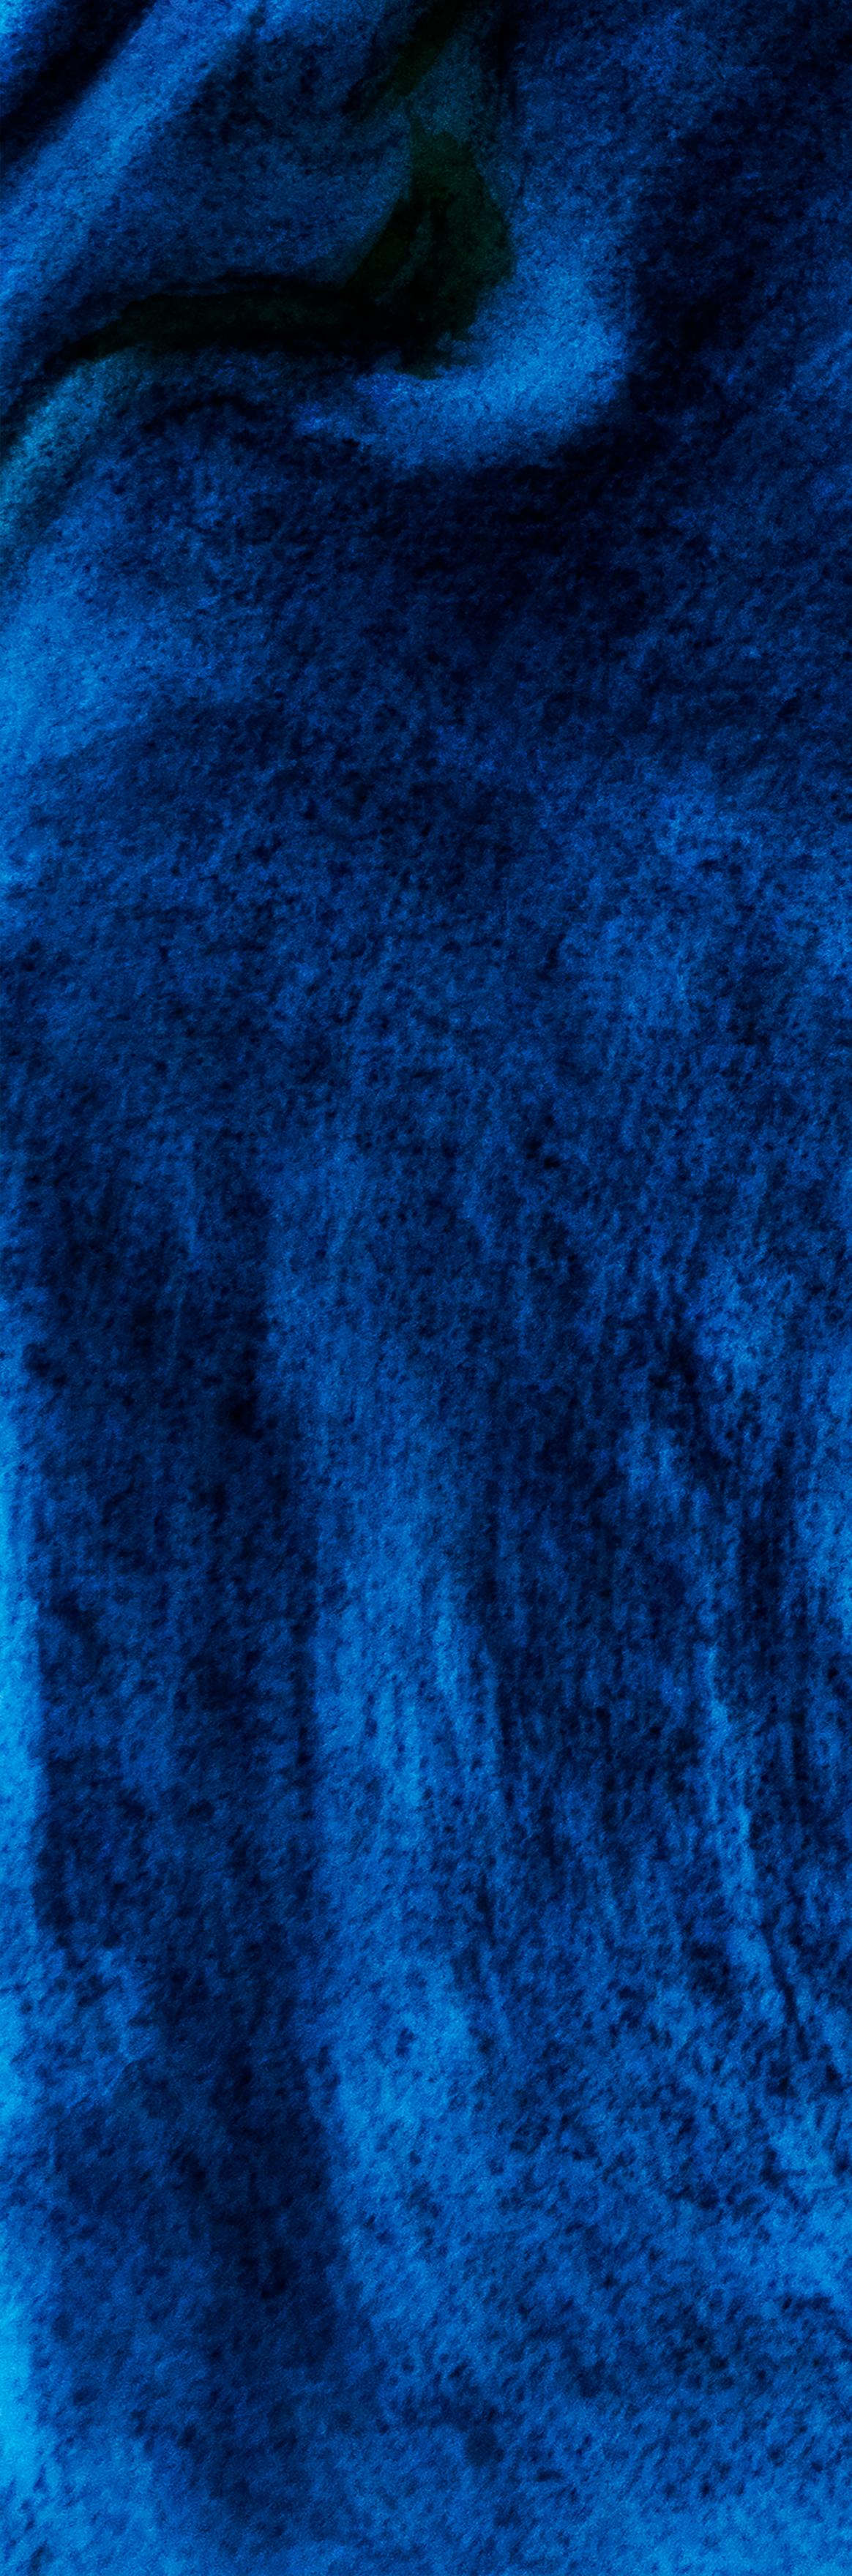 El sueño azul (Abstrakt), Print, von Sonja H. Lukenic